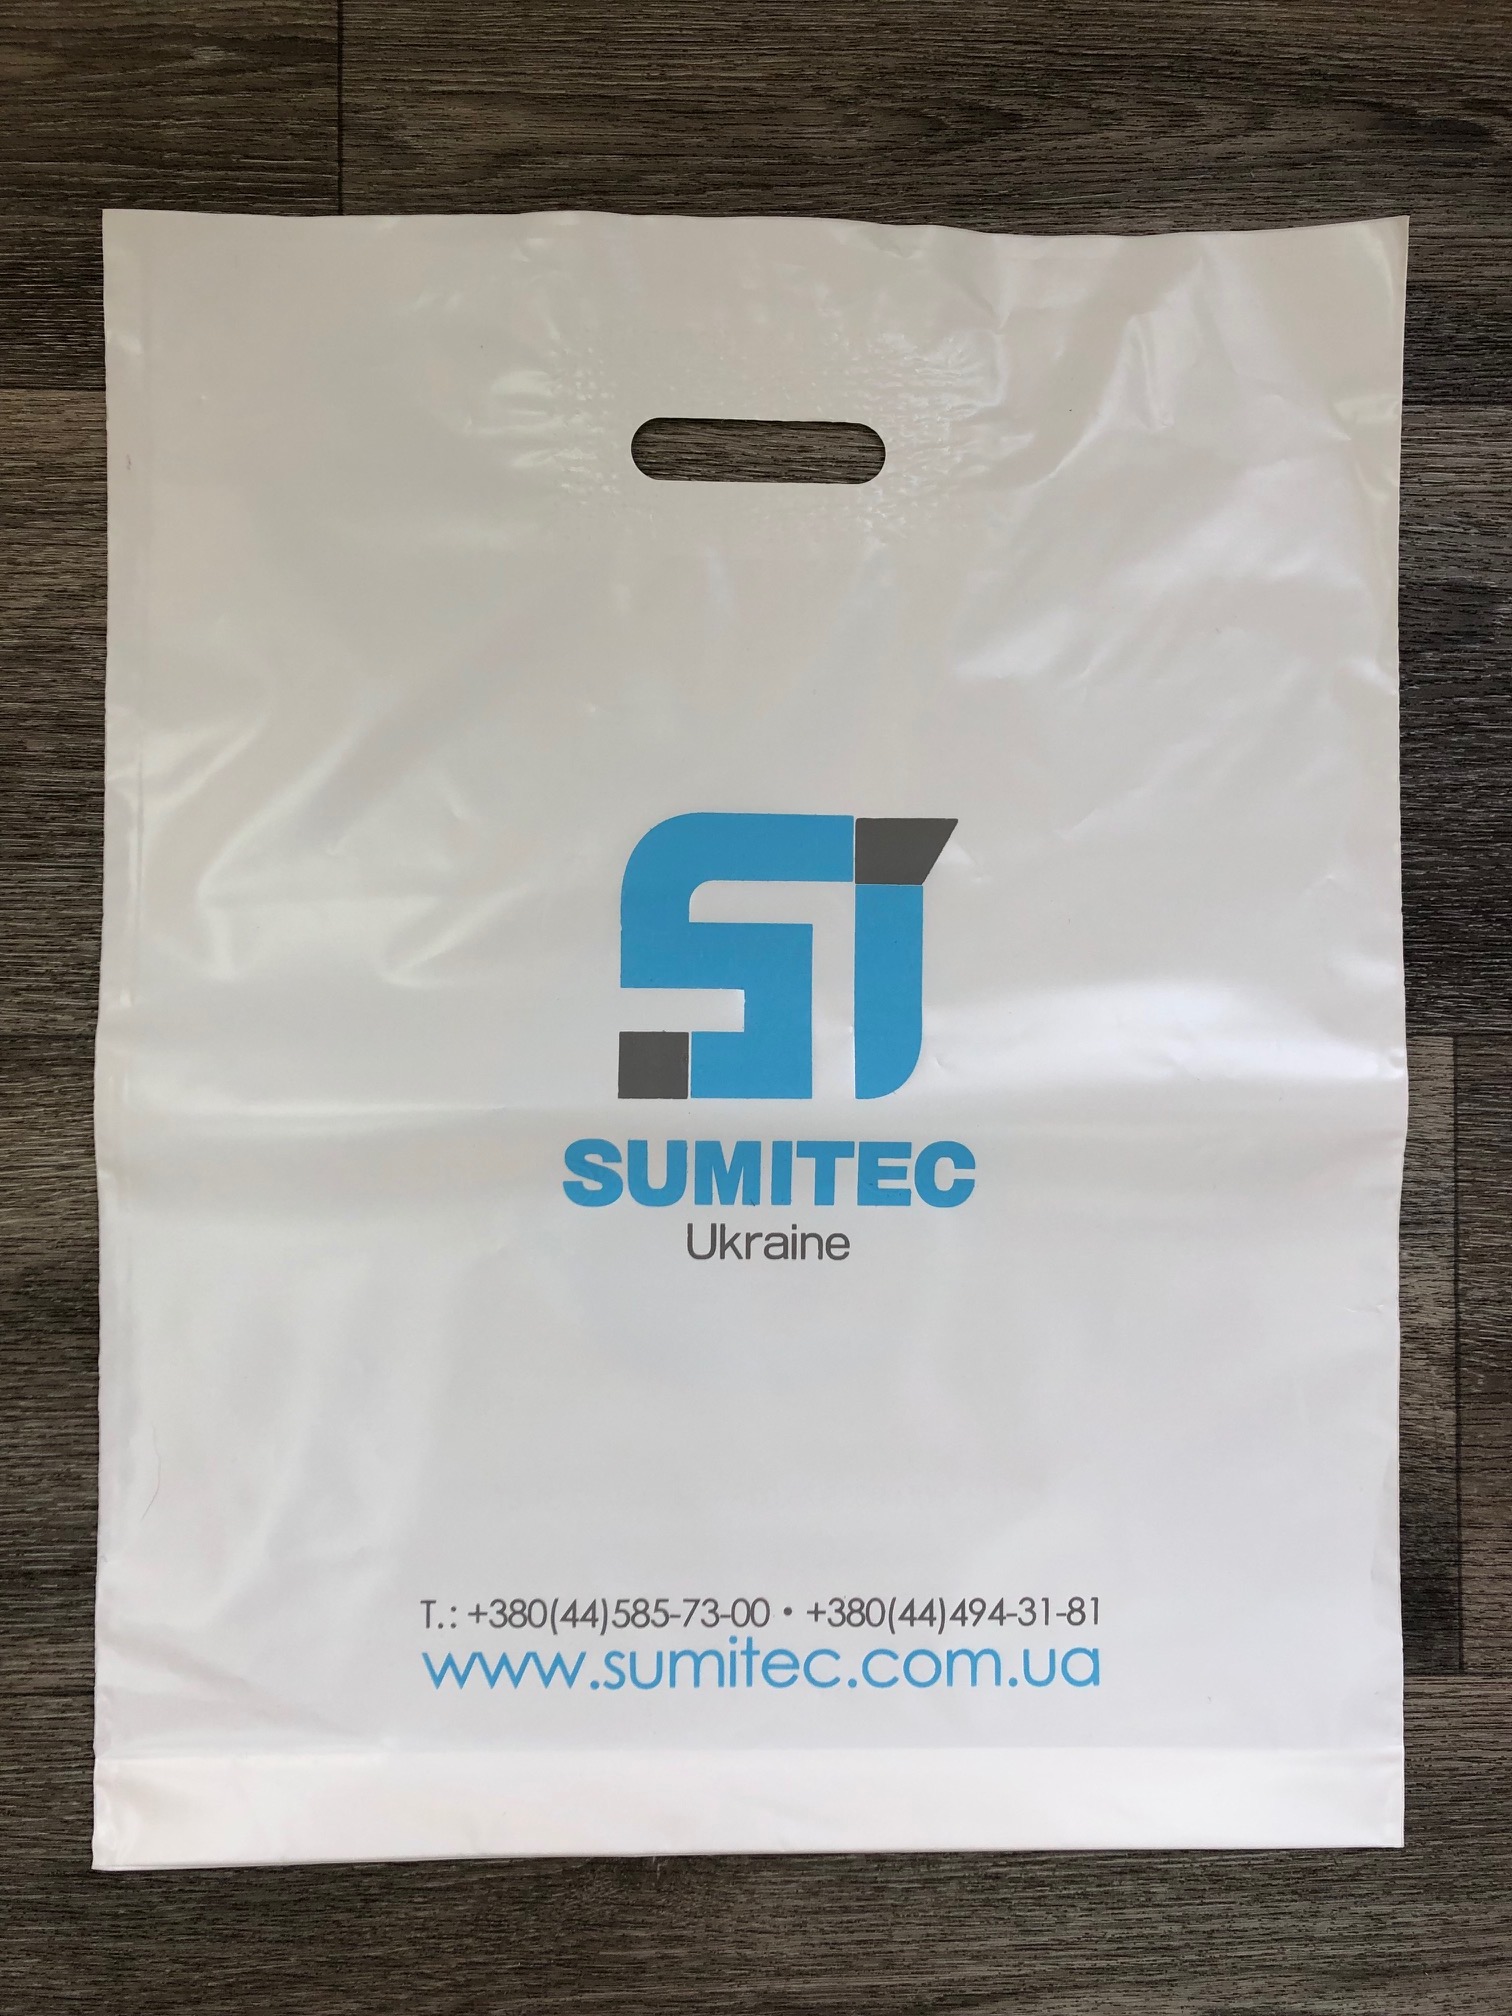 Sumitec Ukraine polyethylene bags